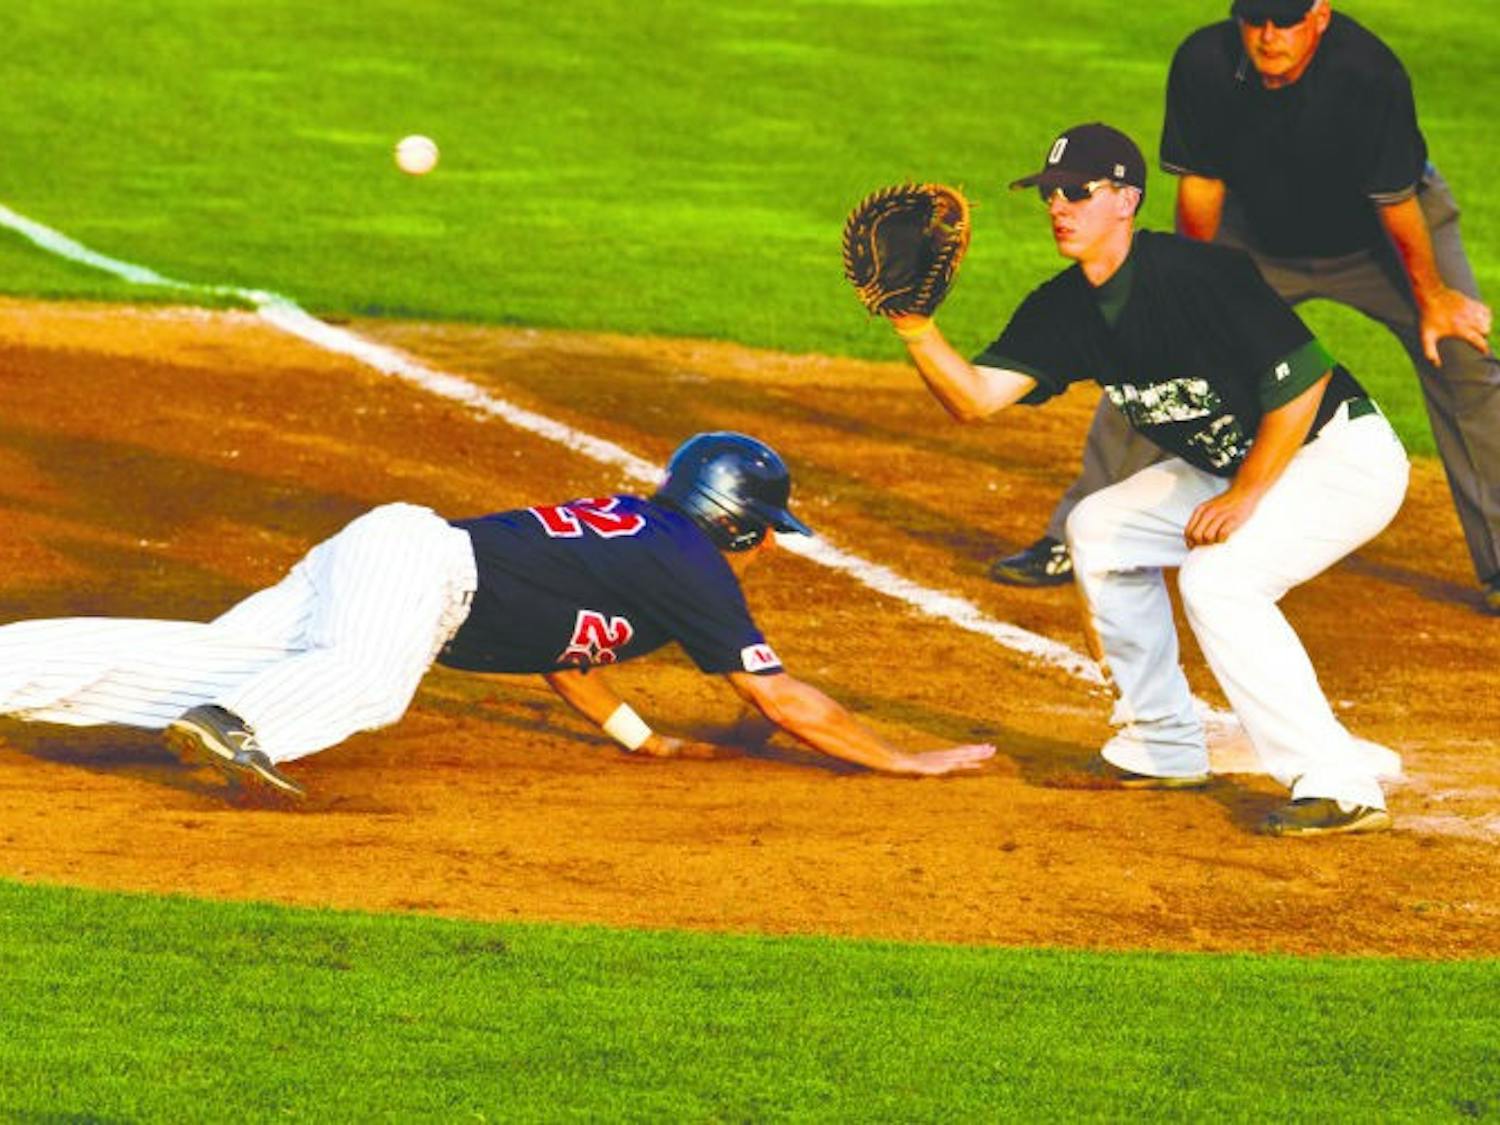 Baseball: Nationally ranked opponent challenges Ohio defense  